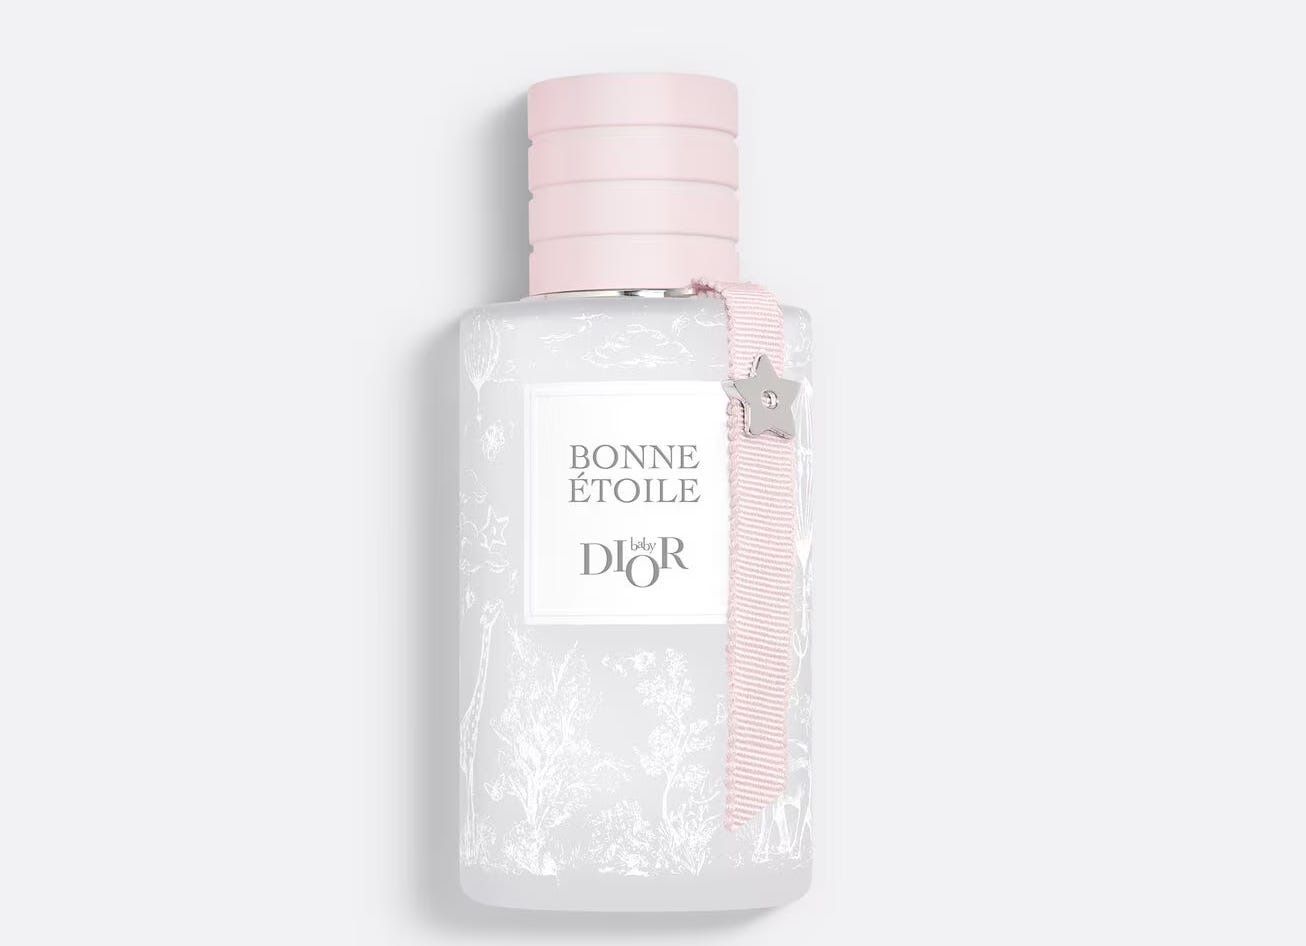 bottle of bonne etoile from dior